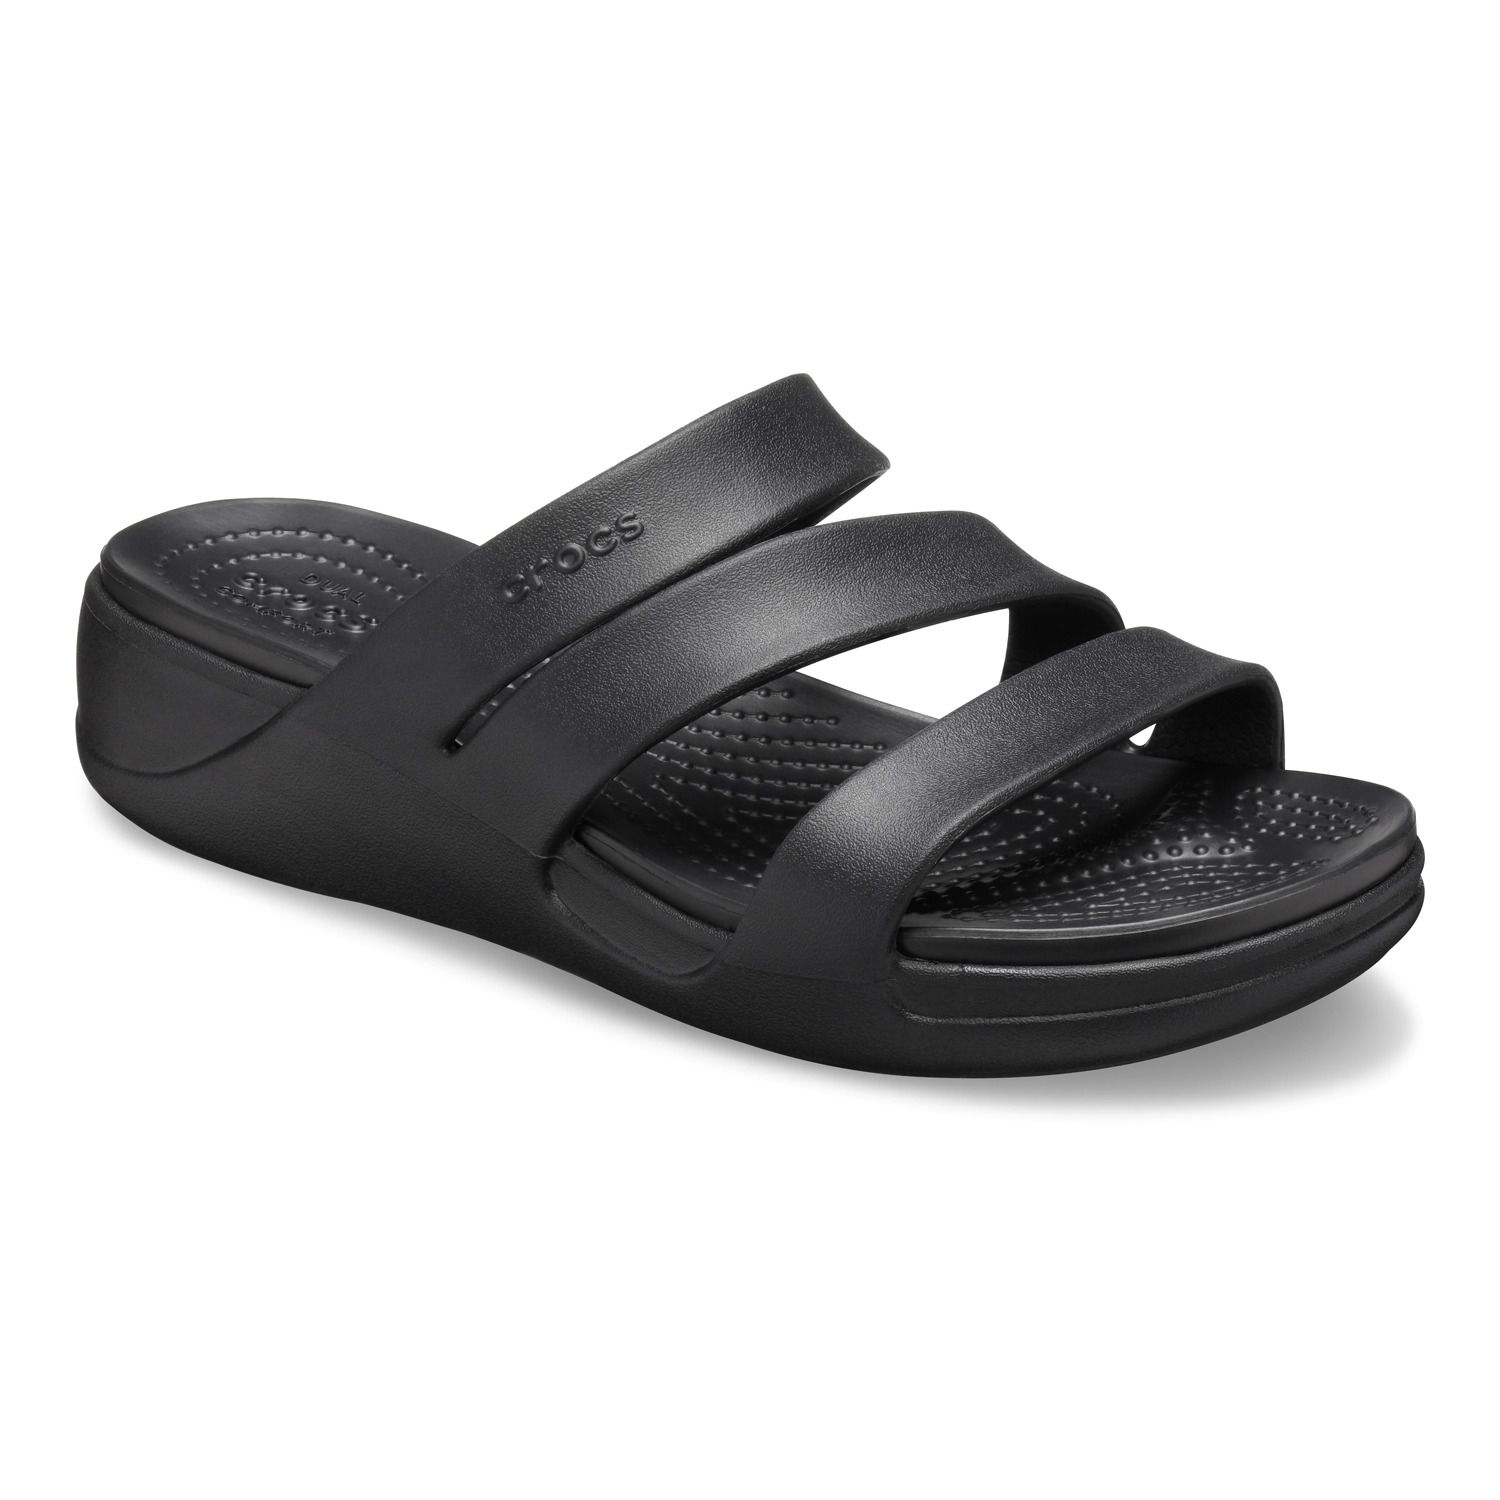 strappy croc sandals